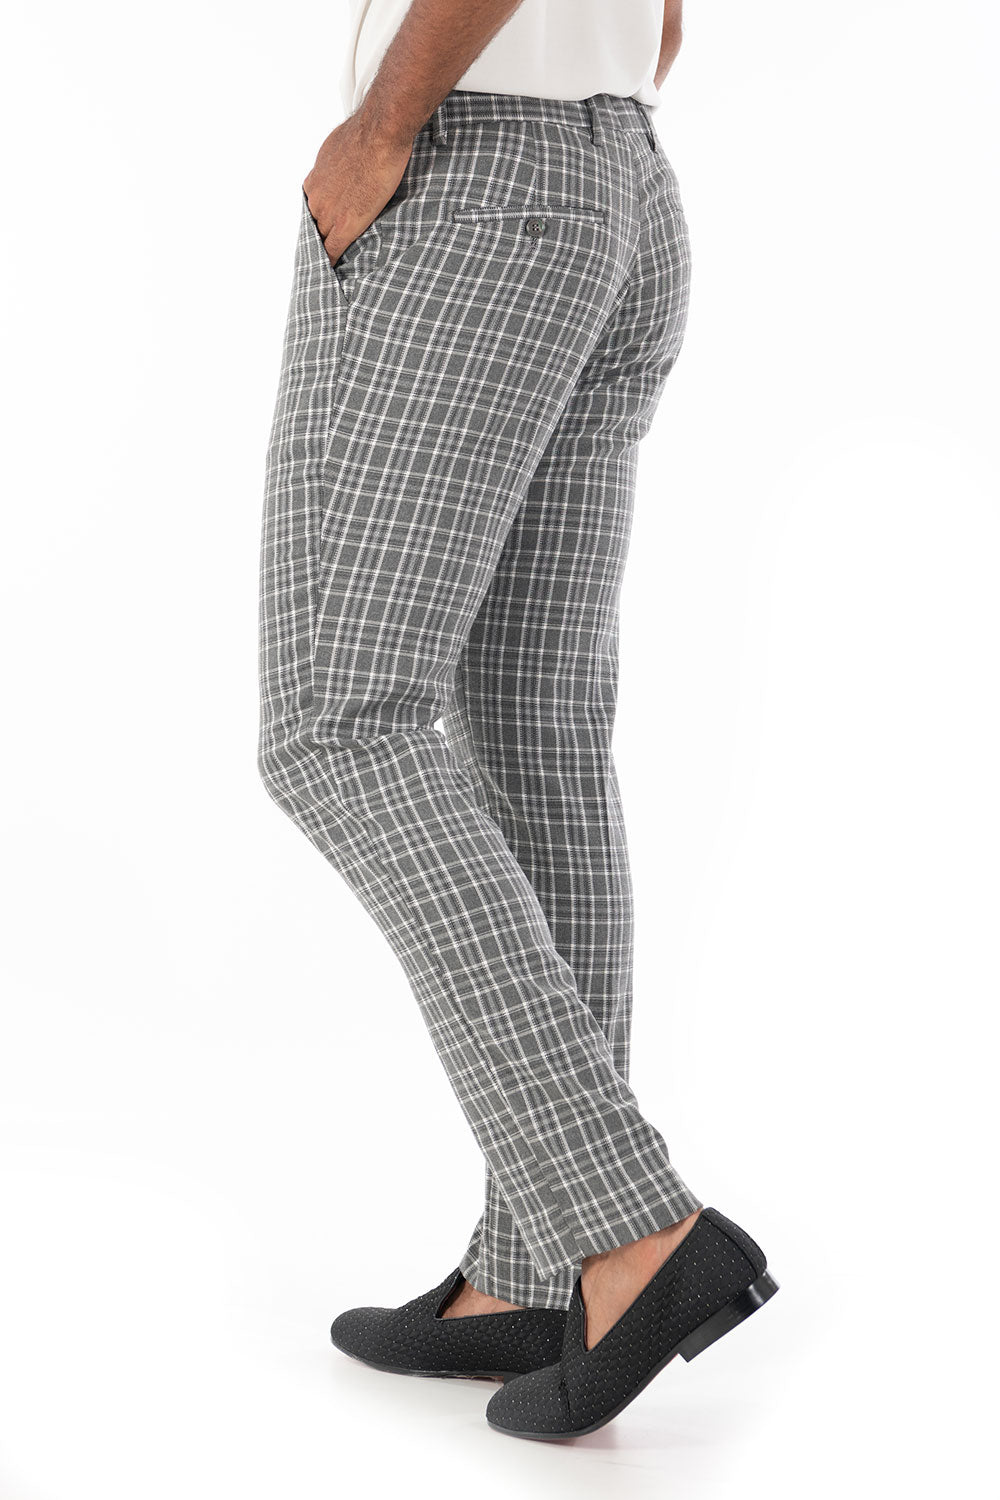 BARABAS men's checkered plaid grey white chino pants CP63